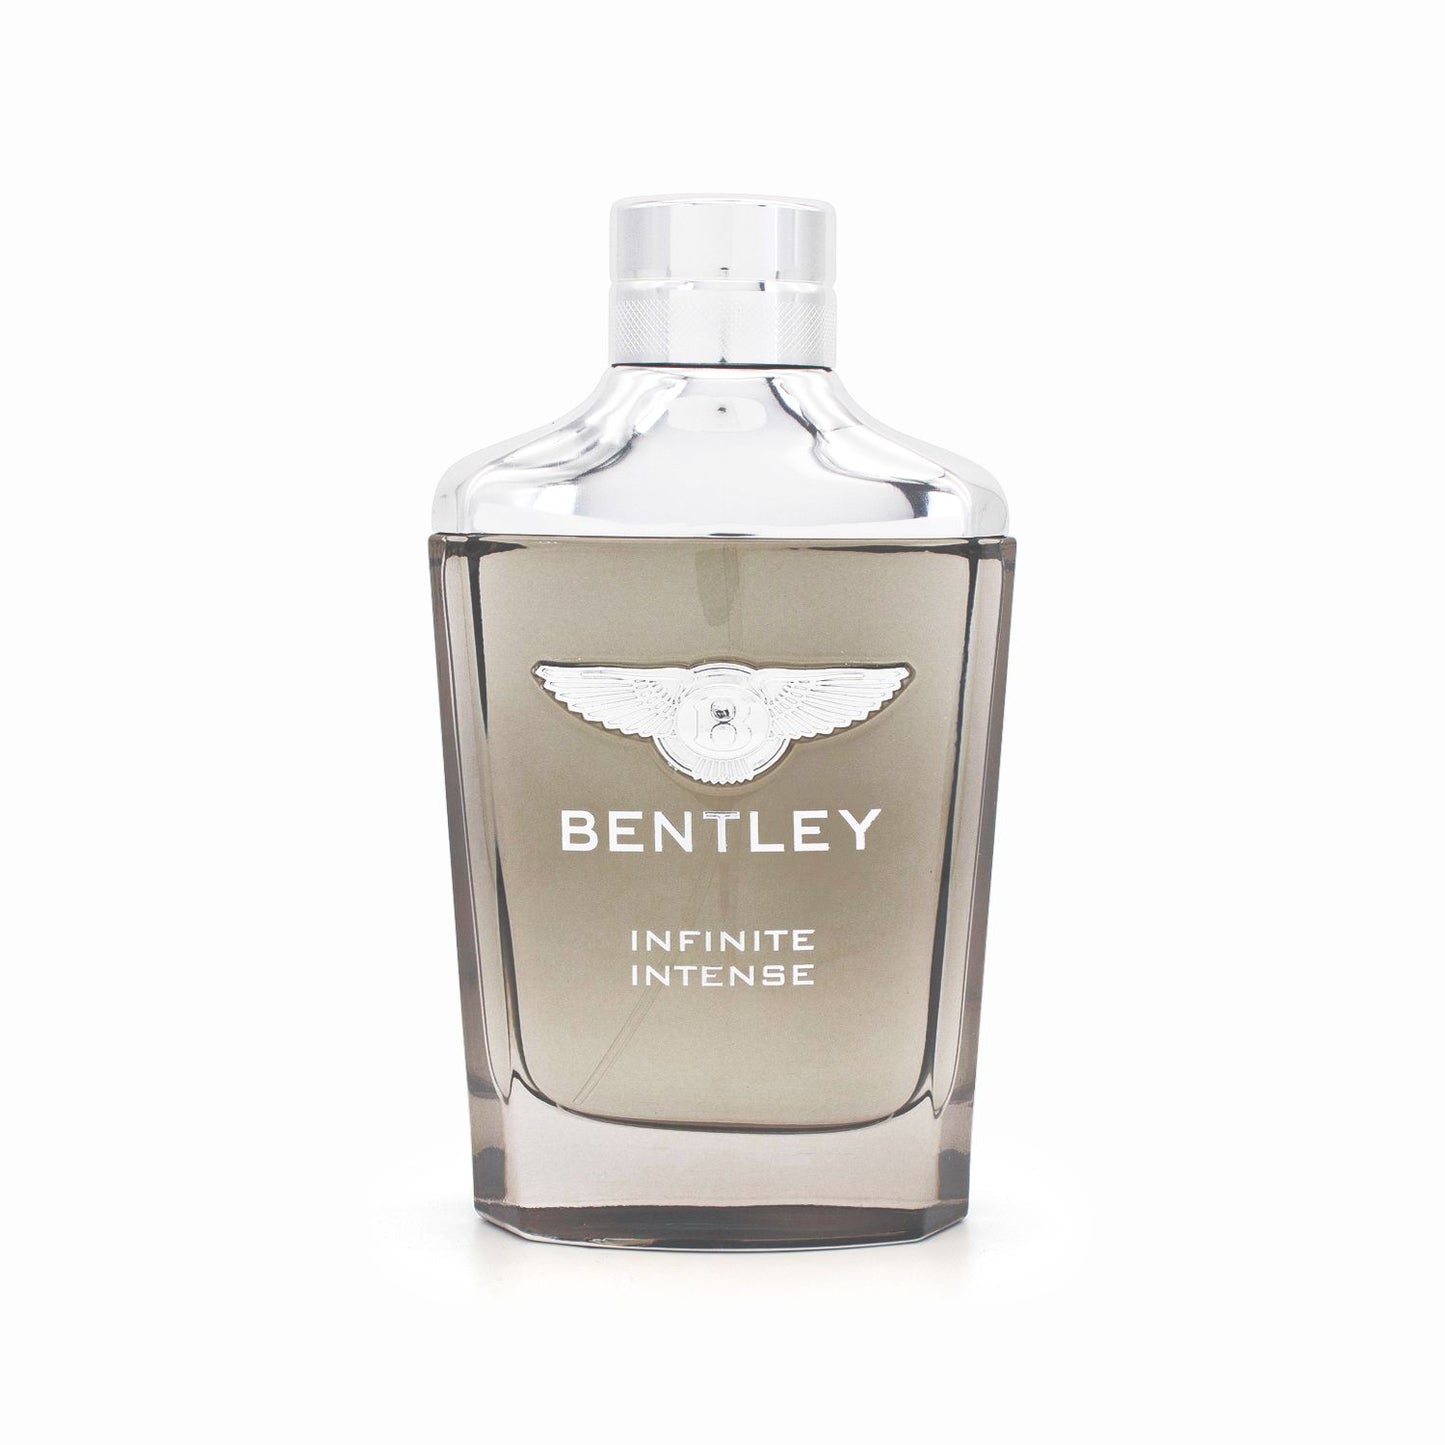 Bentley Infinite Intense Eau de Parfum Spray 100ml - Imperfect Box